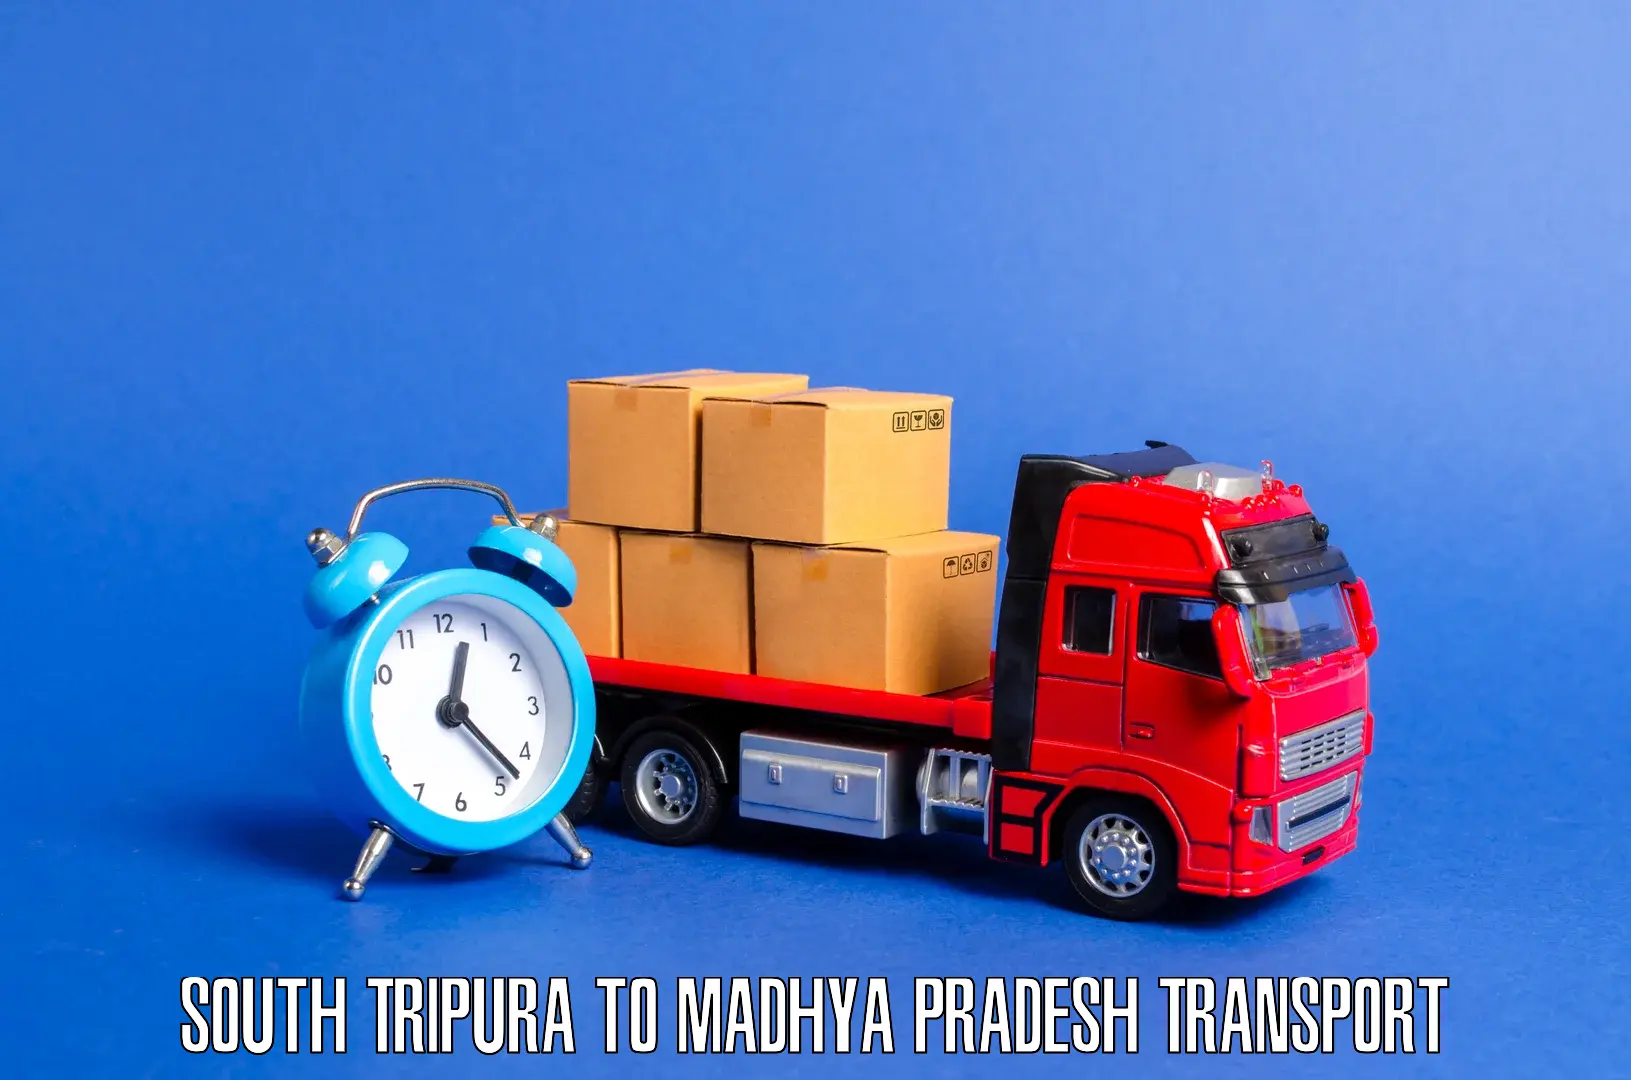 Nearby transport service South Tripura to Garh Rewa